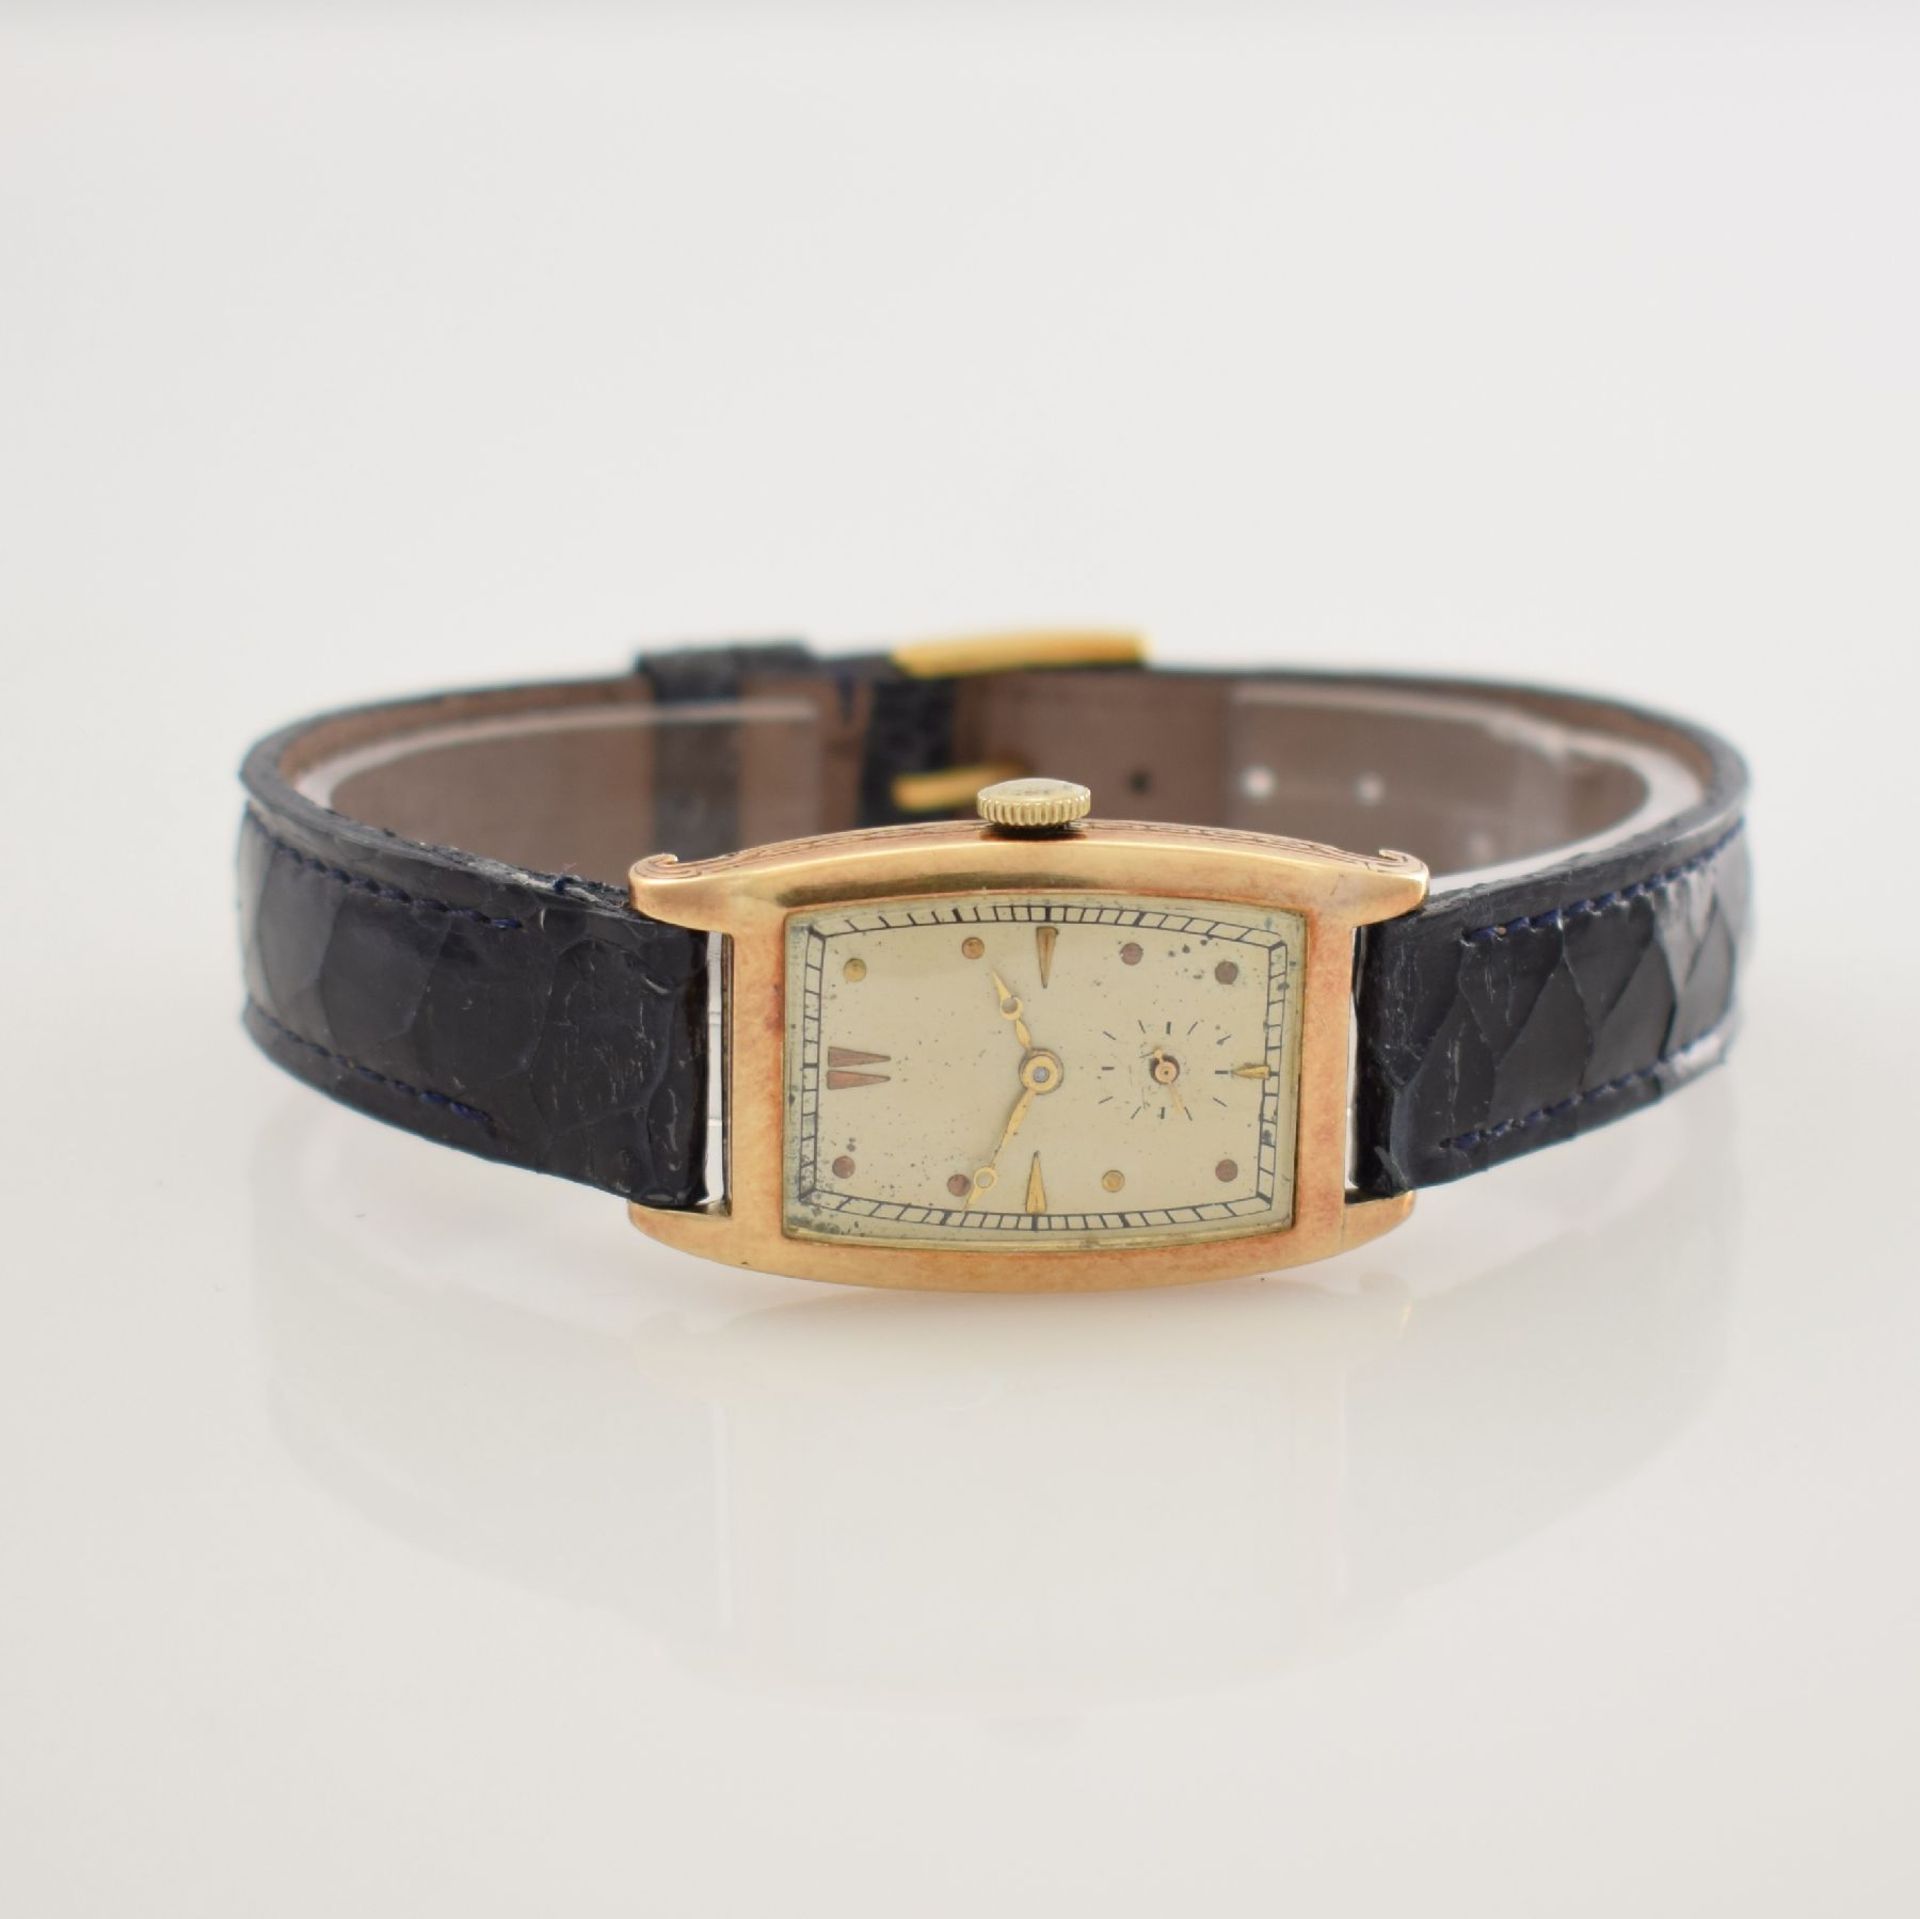 IWC seltene tonneau-förmige Armbanduhr in GG 585/000, Schweiz um 1924, Scharniergeh. m. seitl.